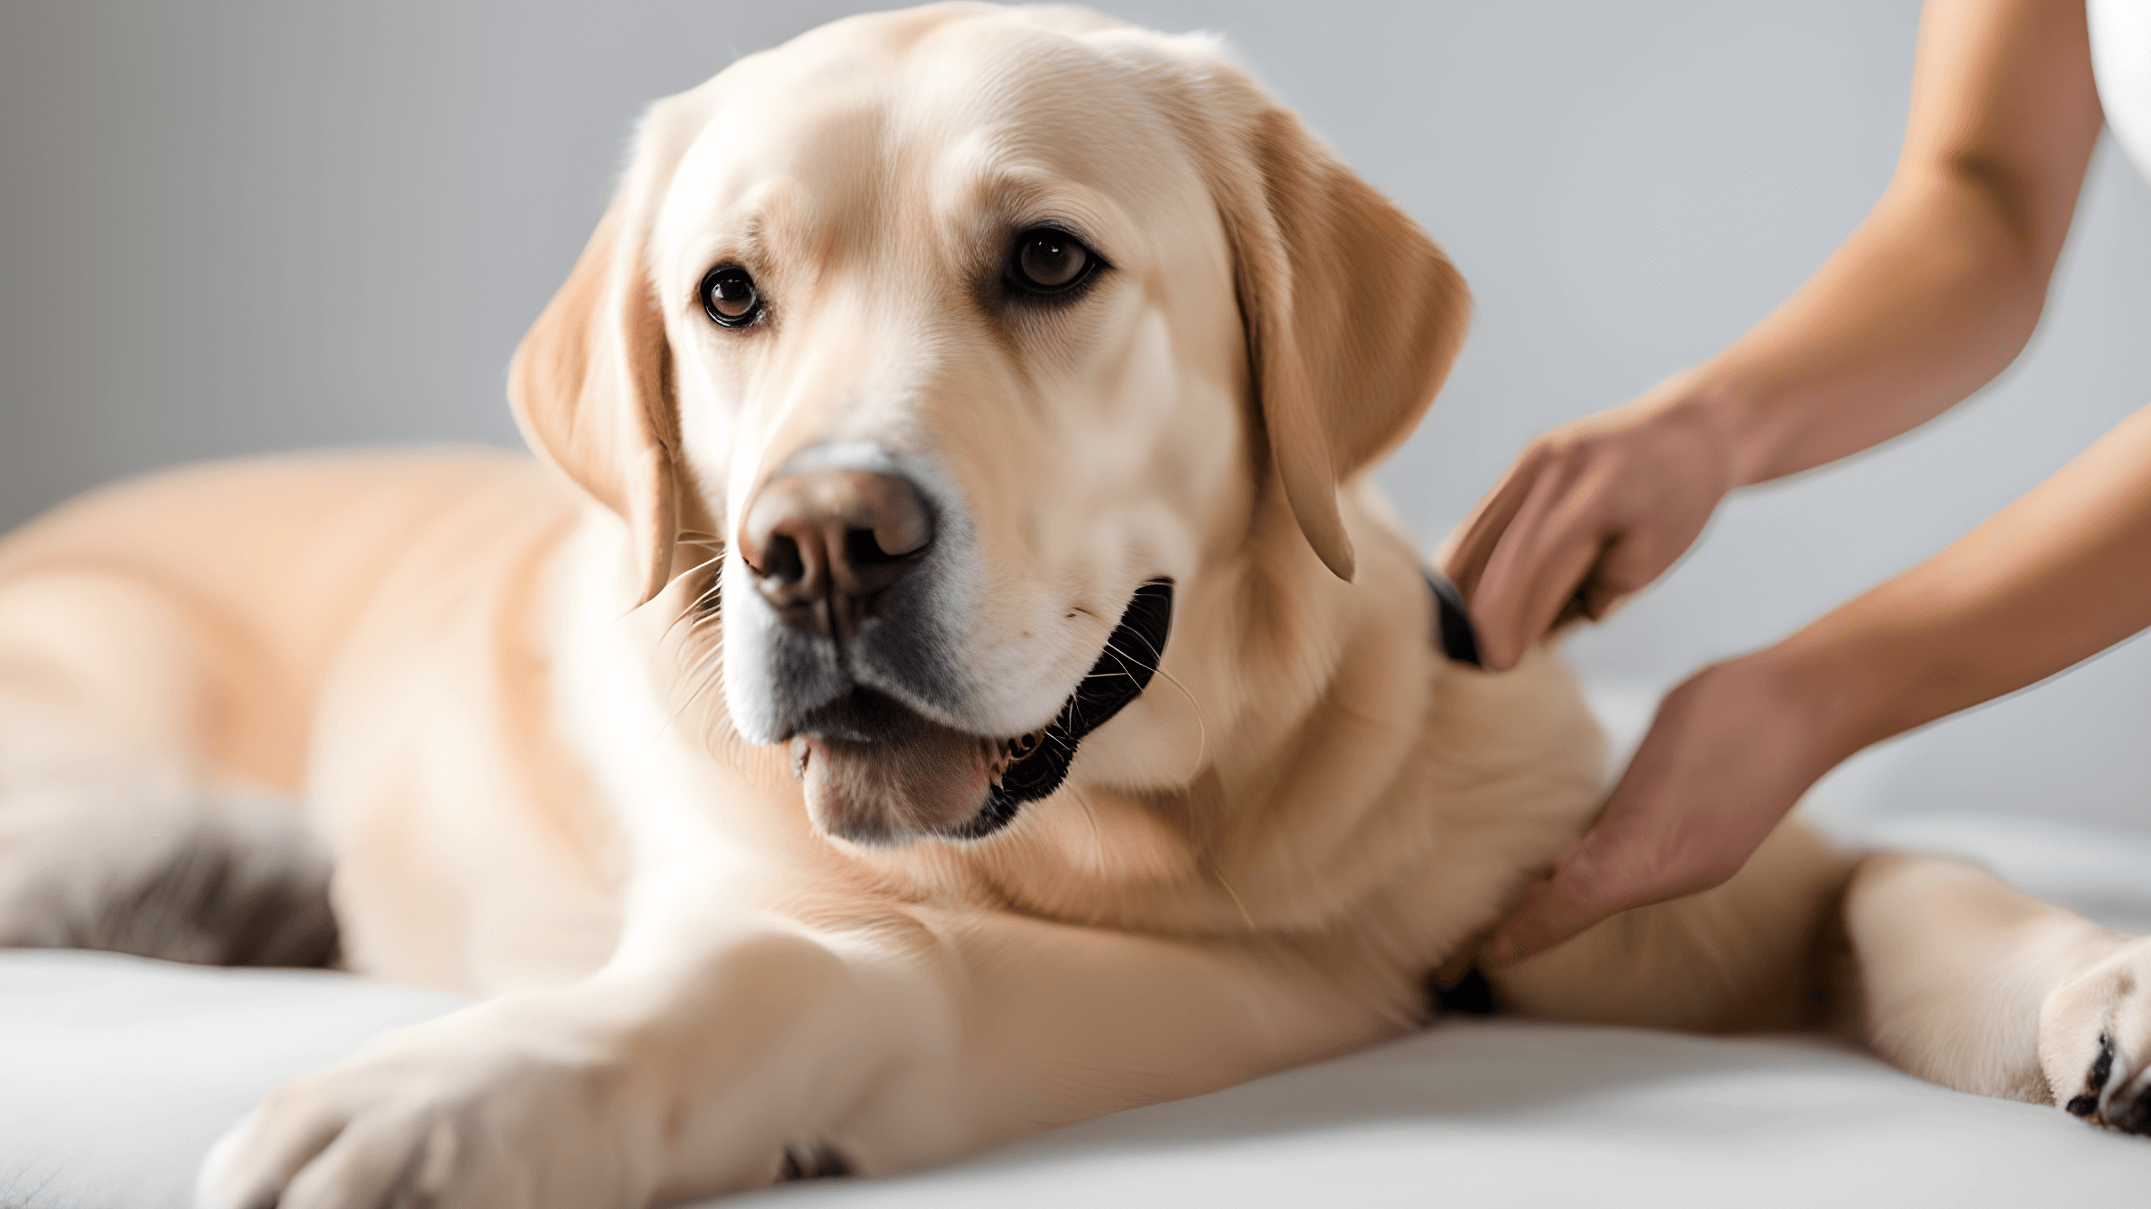 Labrador Retriever enjoying a luxurious grooming session